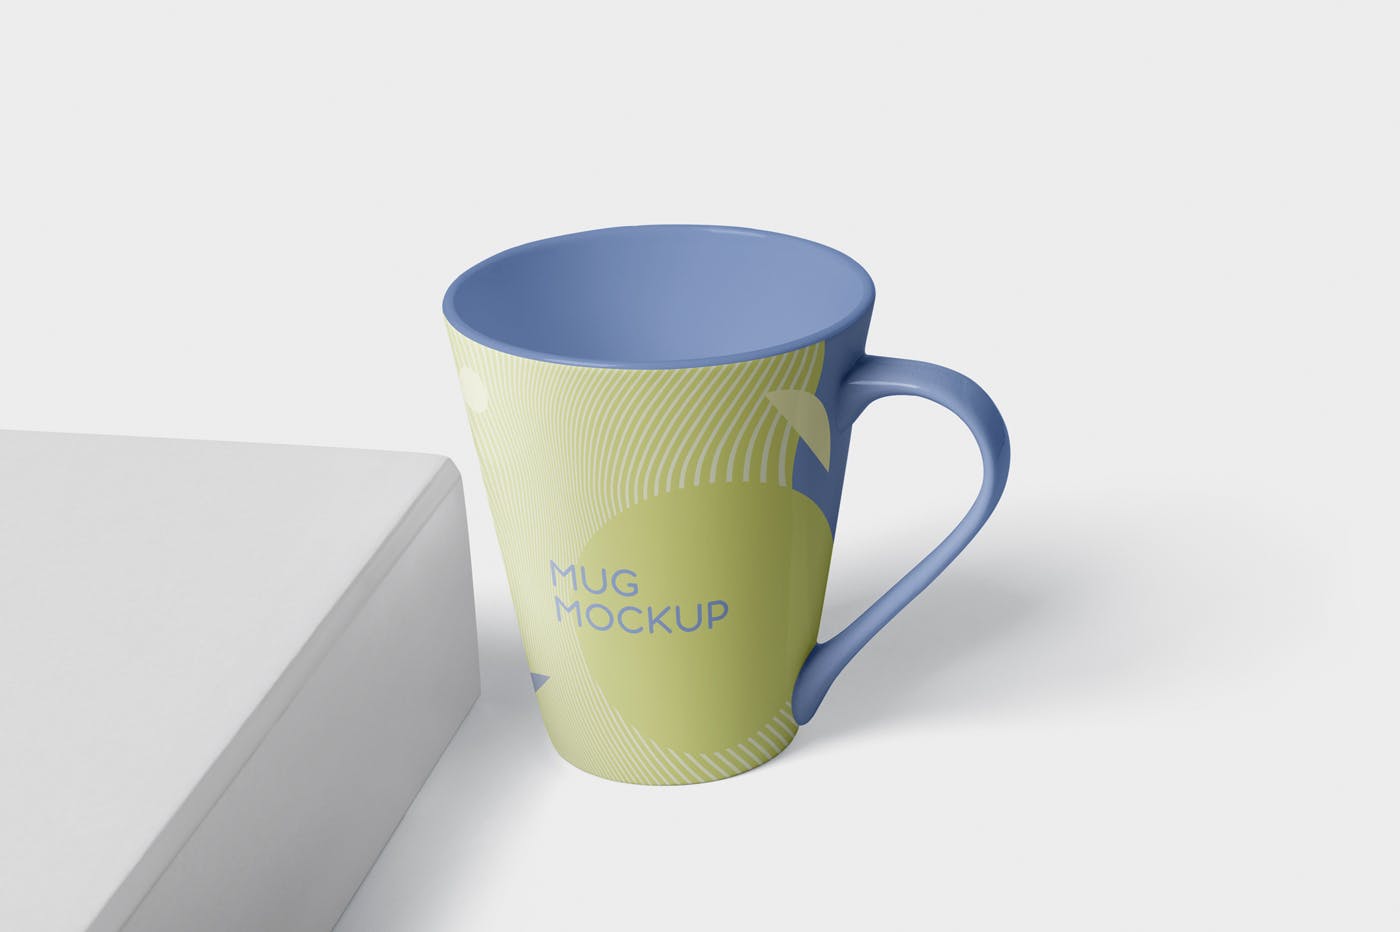 锥形马克杯图案设计非凡图库精选 Mug Mockup – Cone Shaped插图(3)